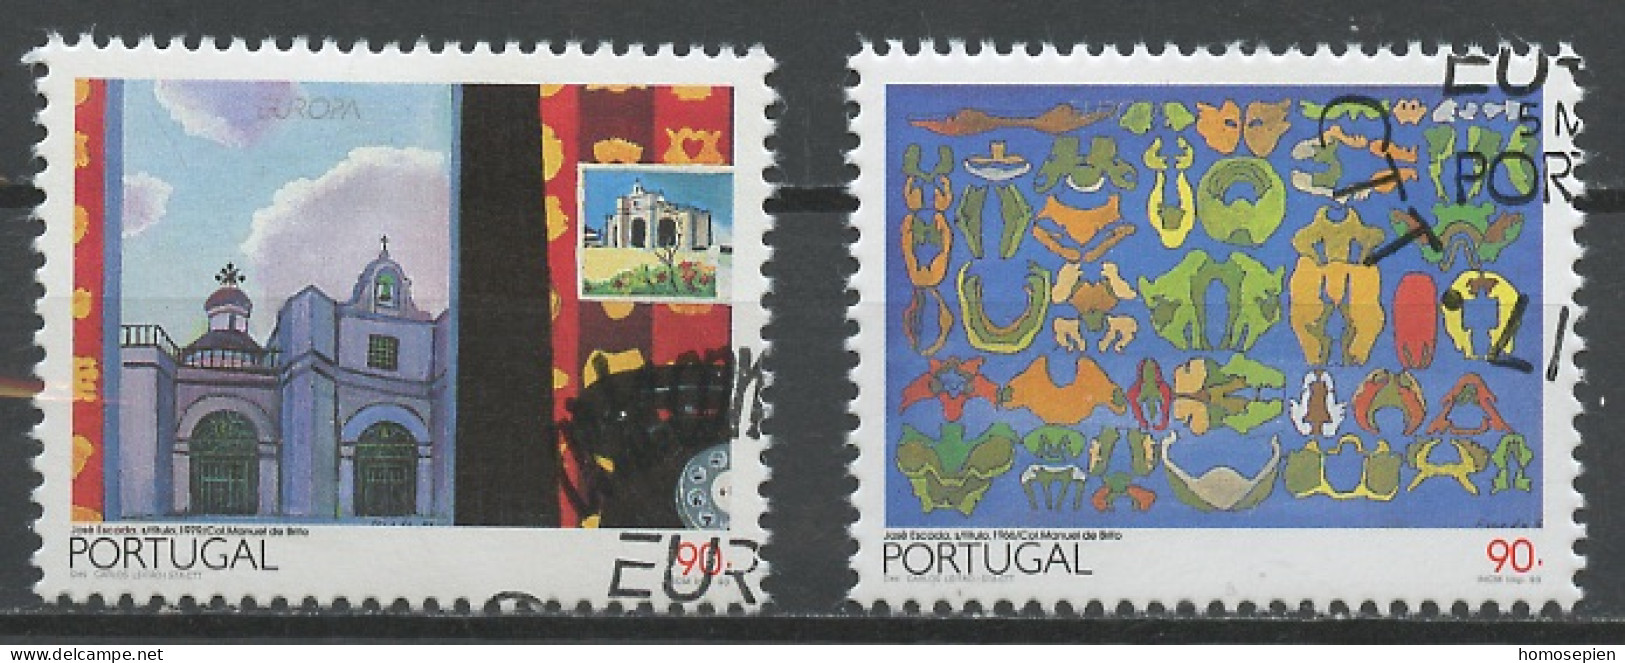 Portugal 1993 Y&T N°1937 à 1938 - Michel N°1959 à 1960 (o) - EUROPA - Gebruikt